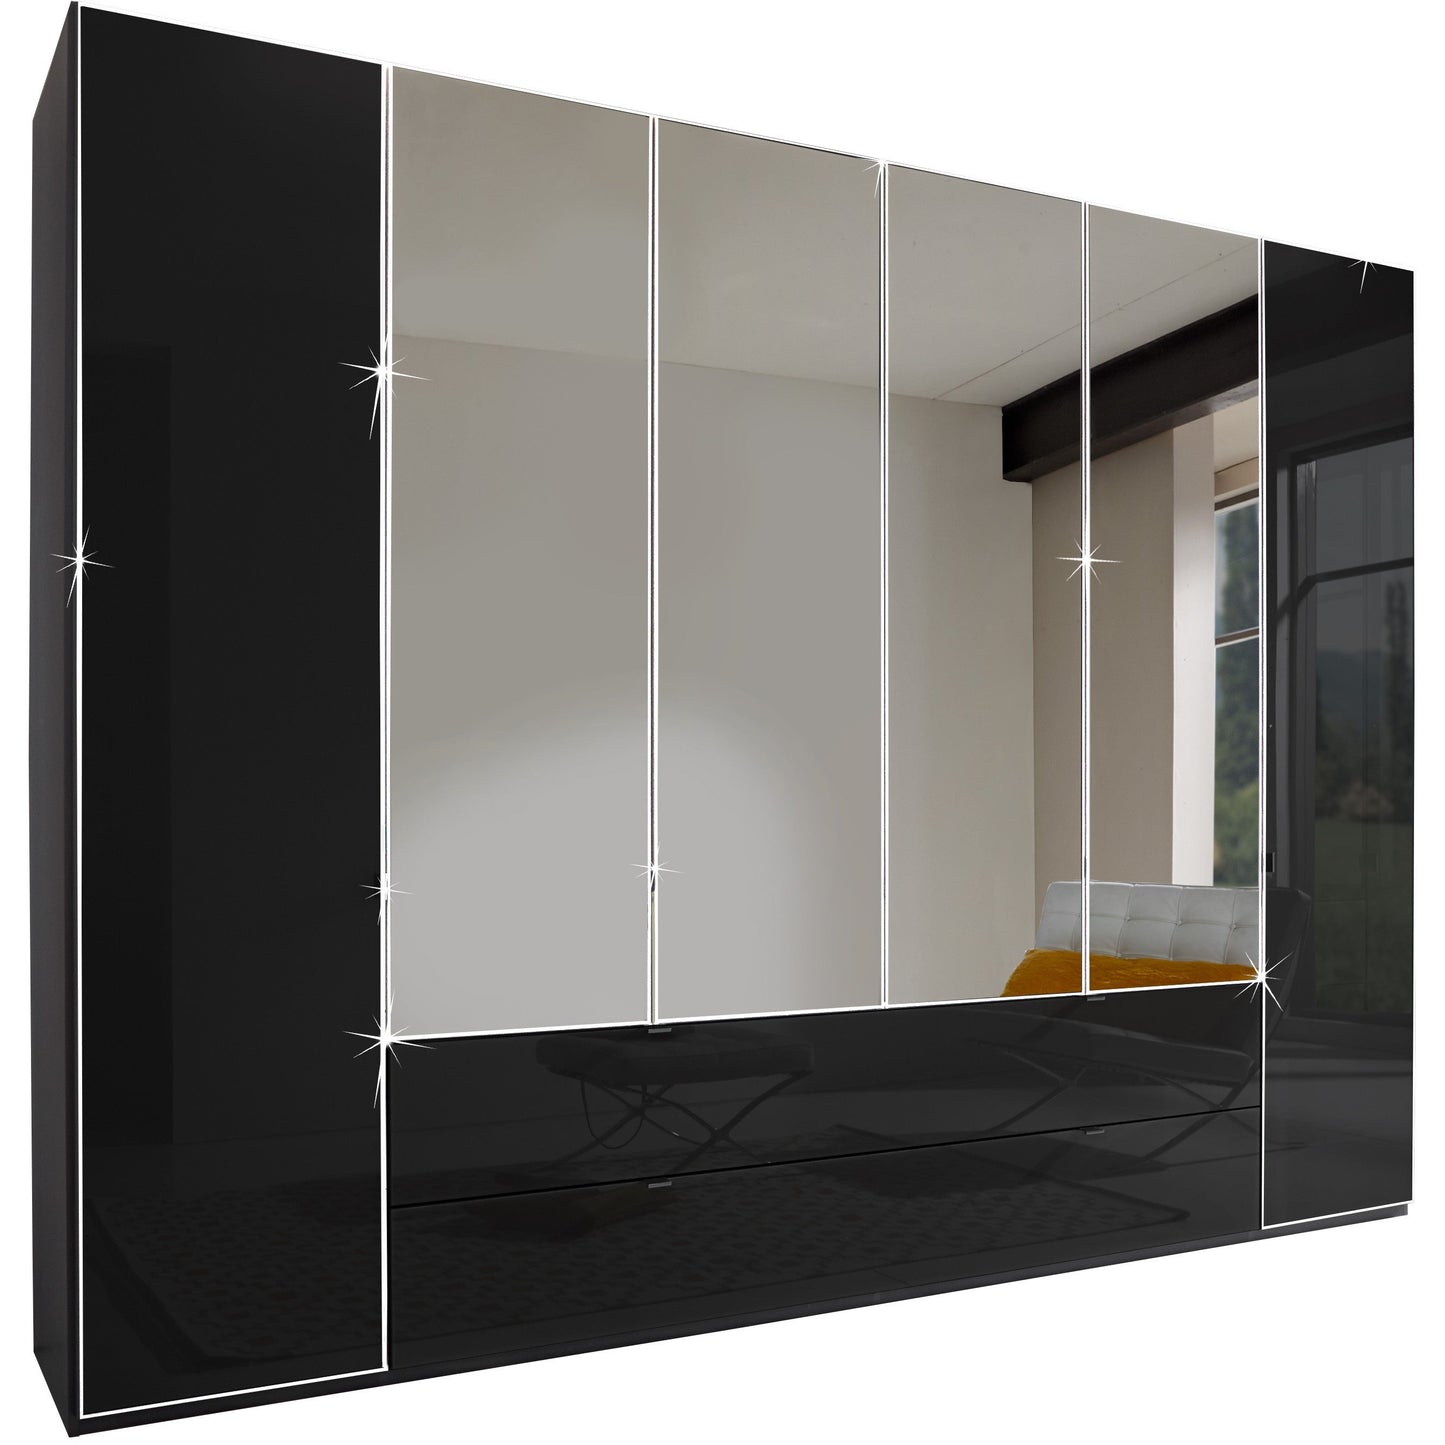 Wiemann Eastside Wardrobe Black Glass Centre Mirror with Drawers 300cm